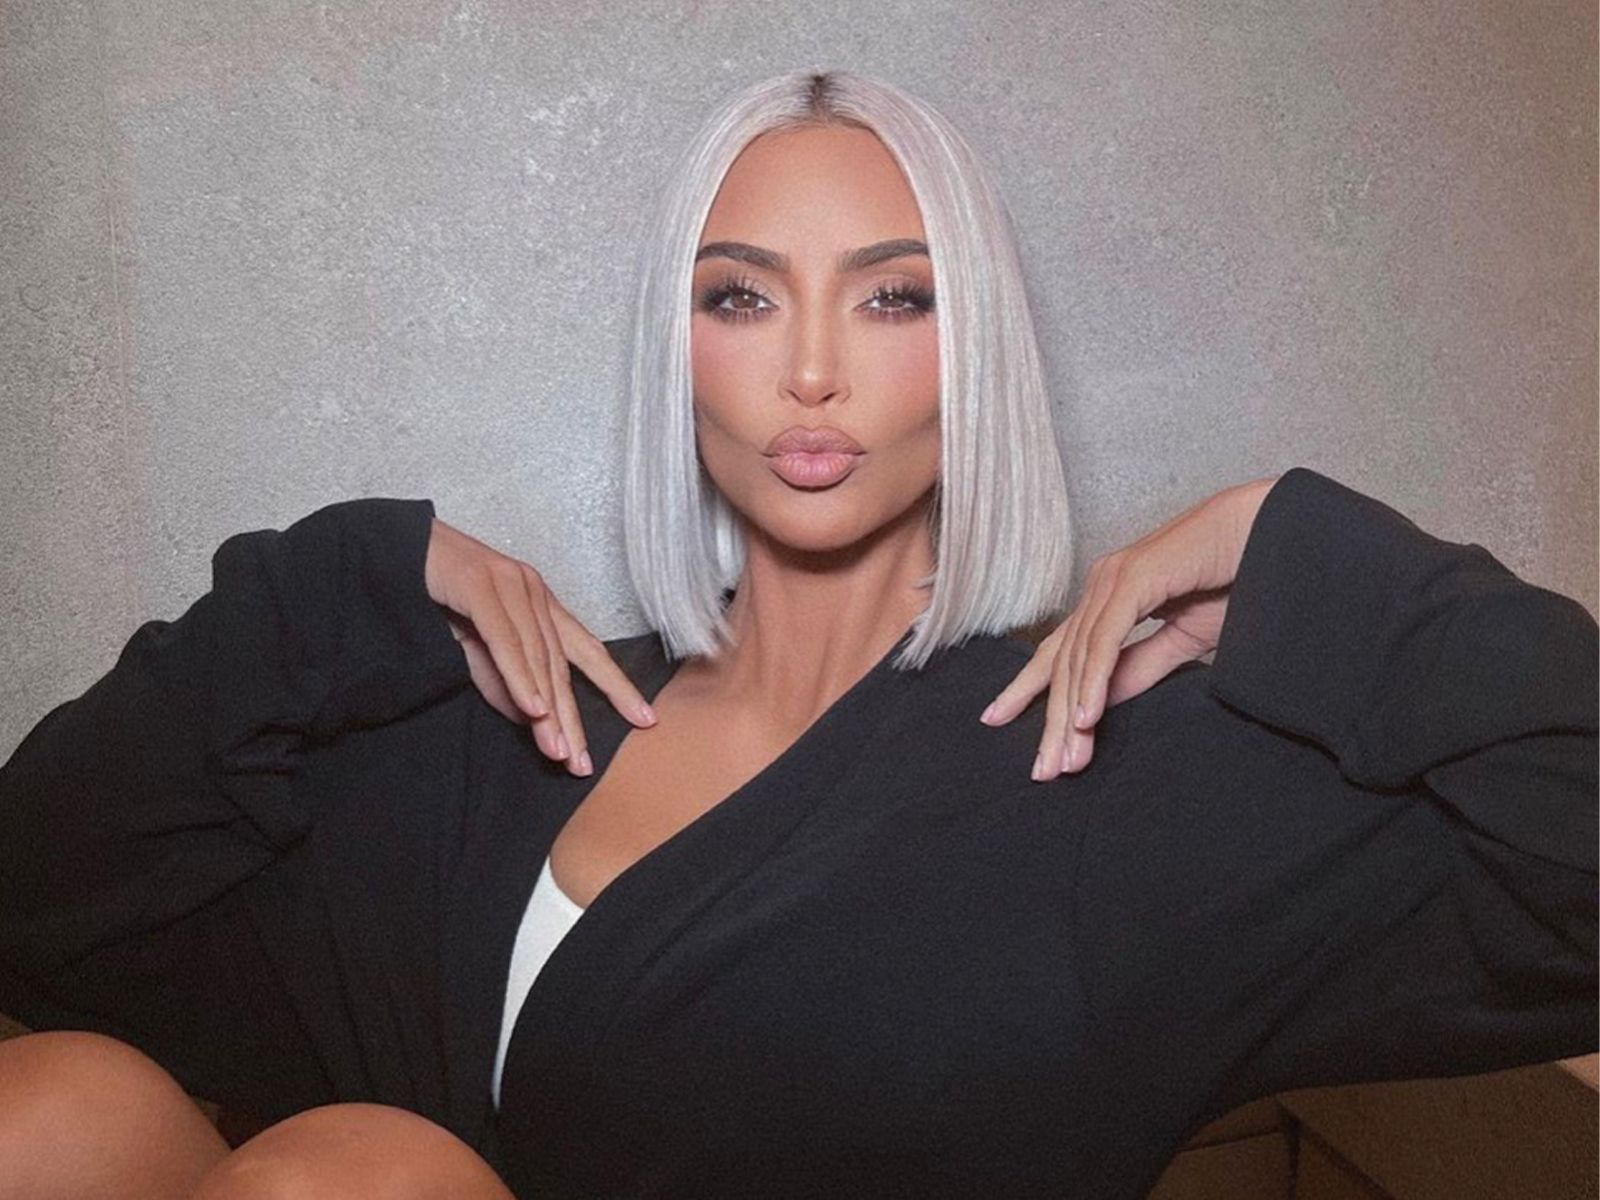 Kim Kardashian lanza su propio podcast en Spotify